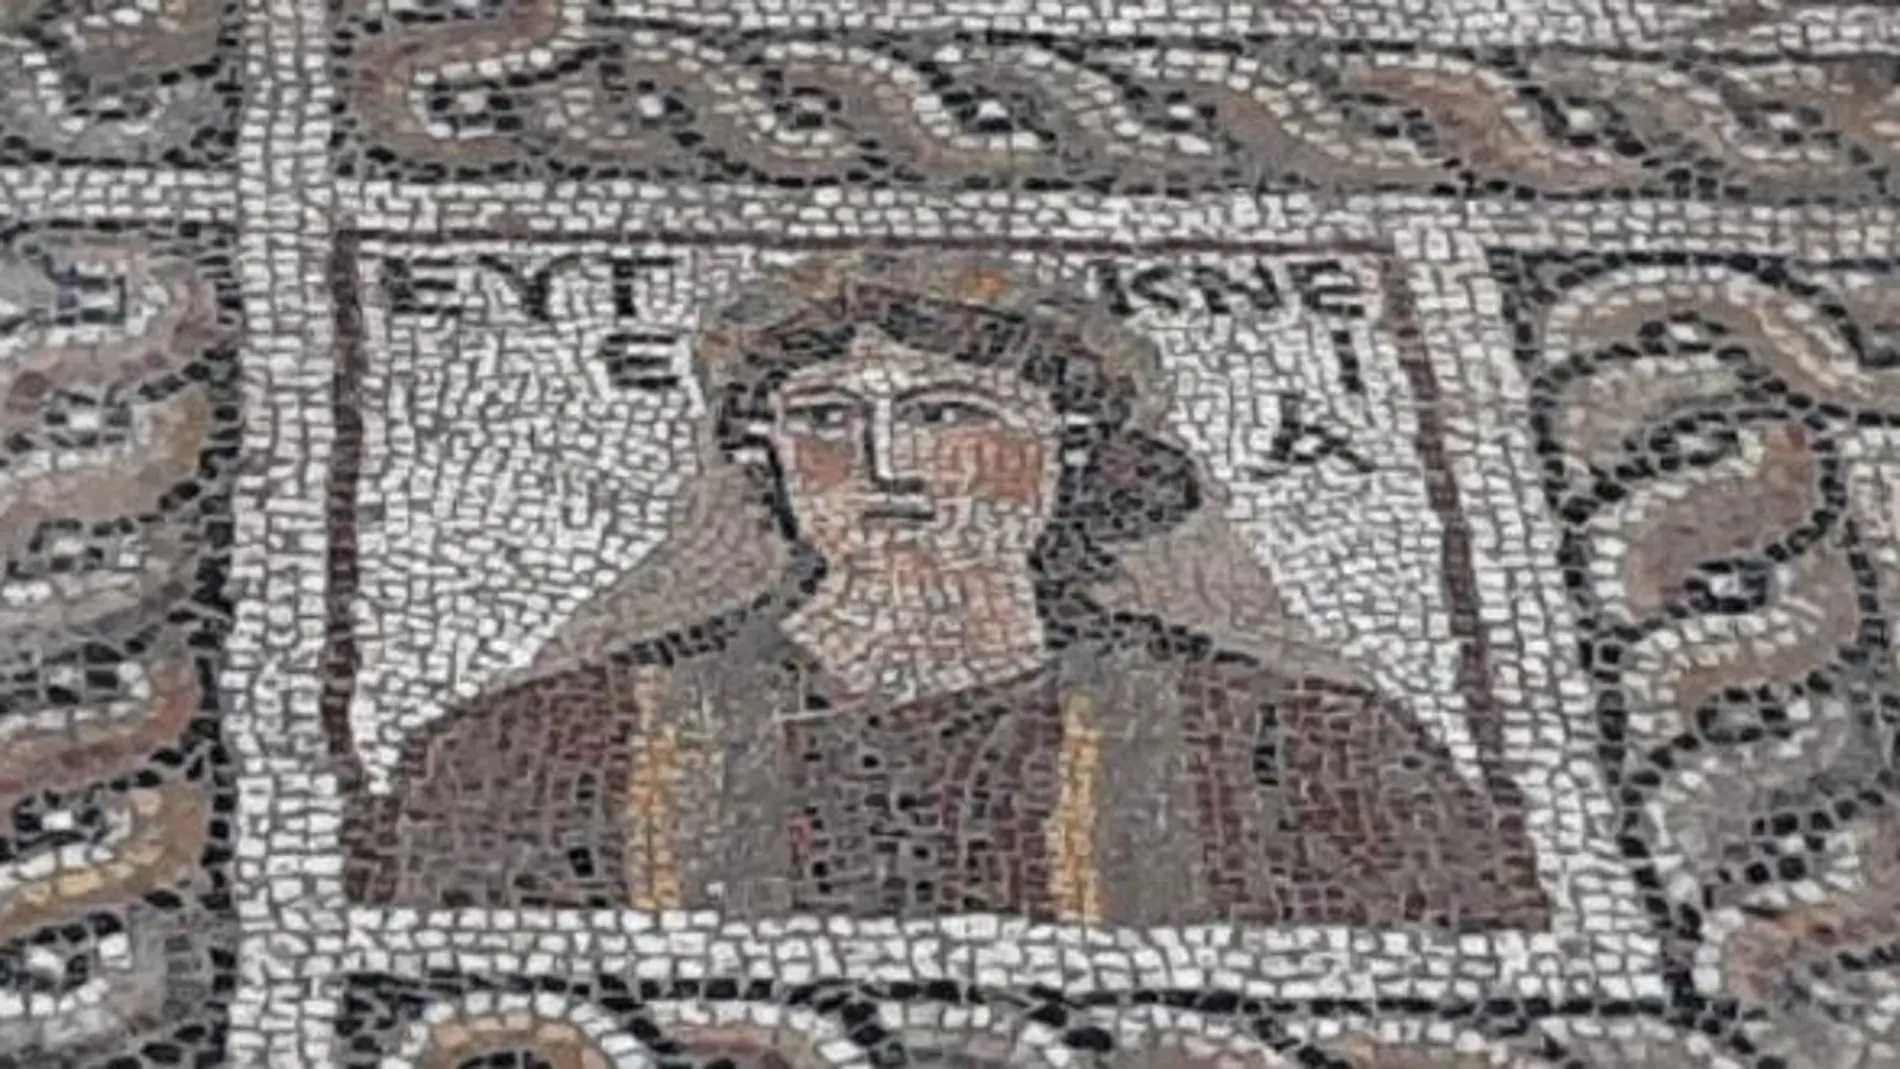 Mosaico encontrado en Flaviapolis